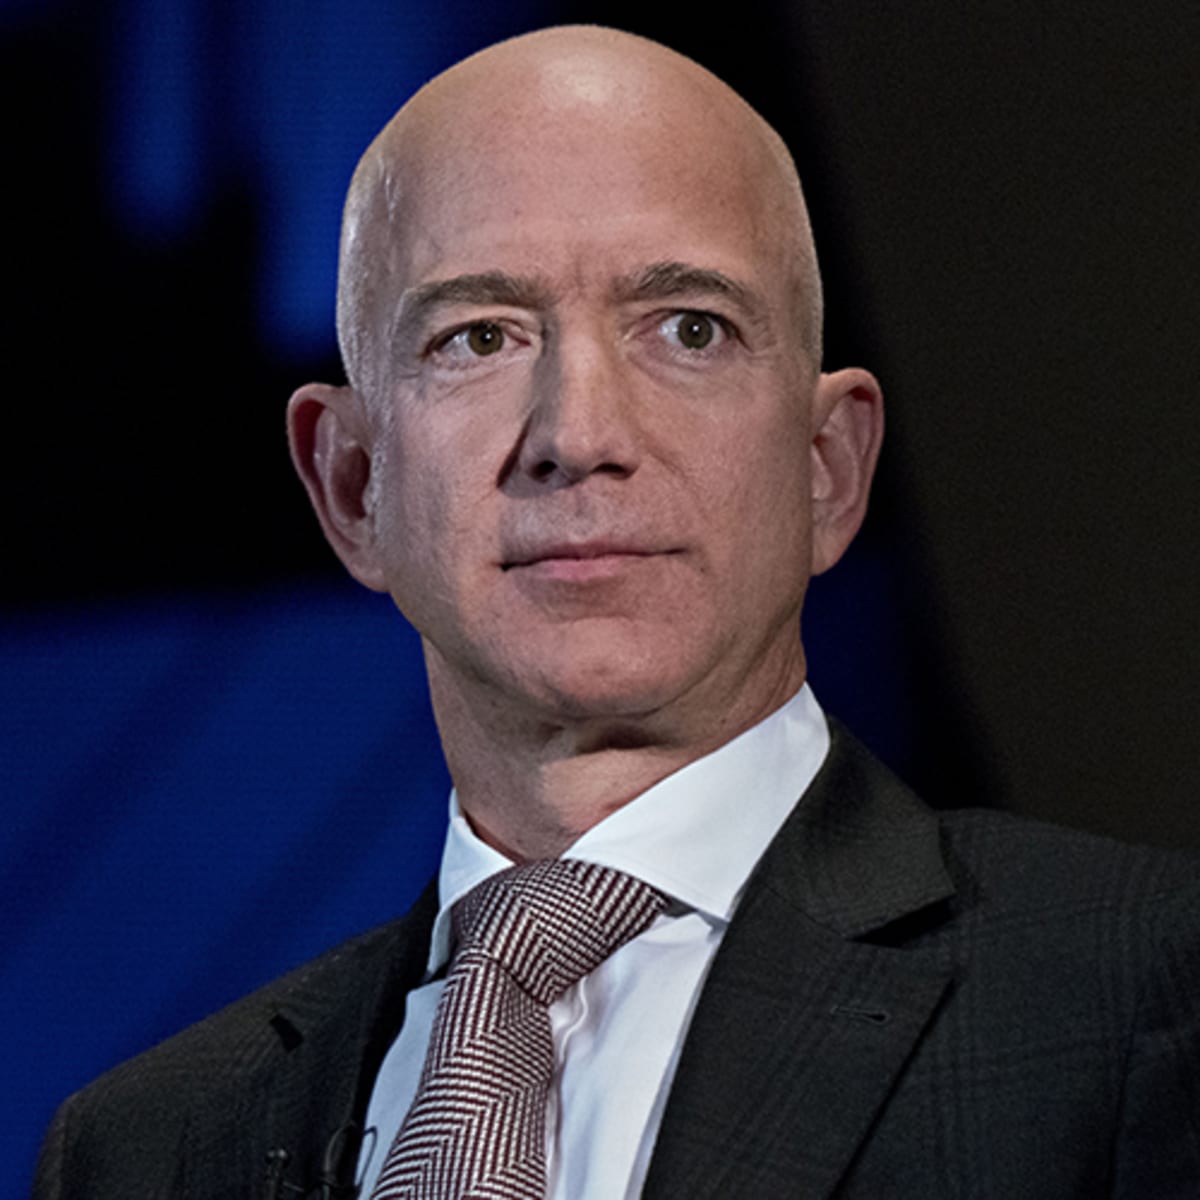 Jeff Bezos Biography; Net Worth, Age, Height, Children, House, Family